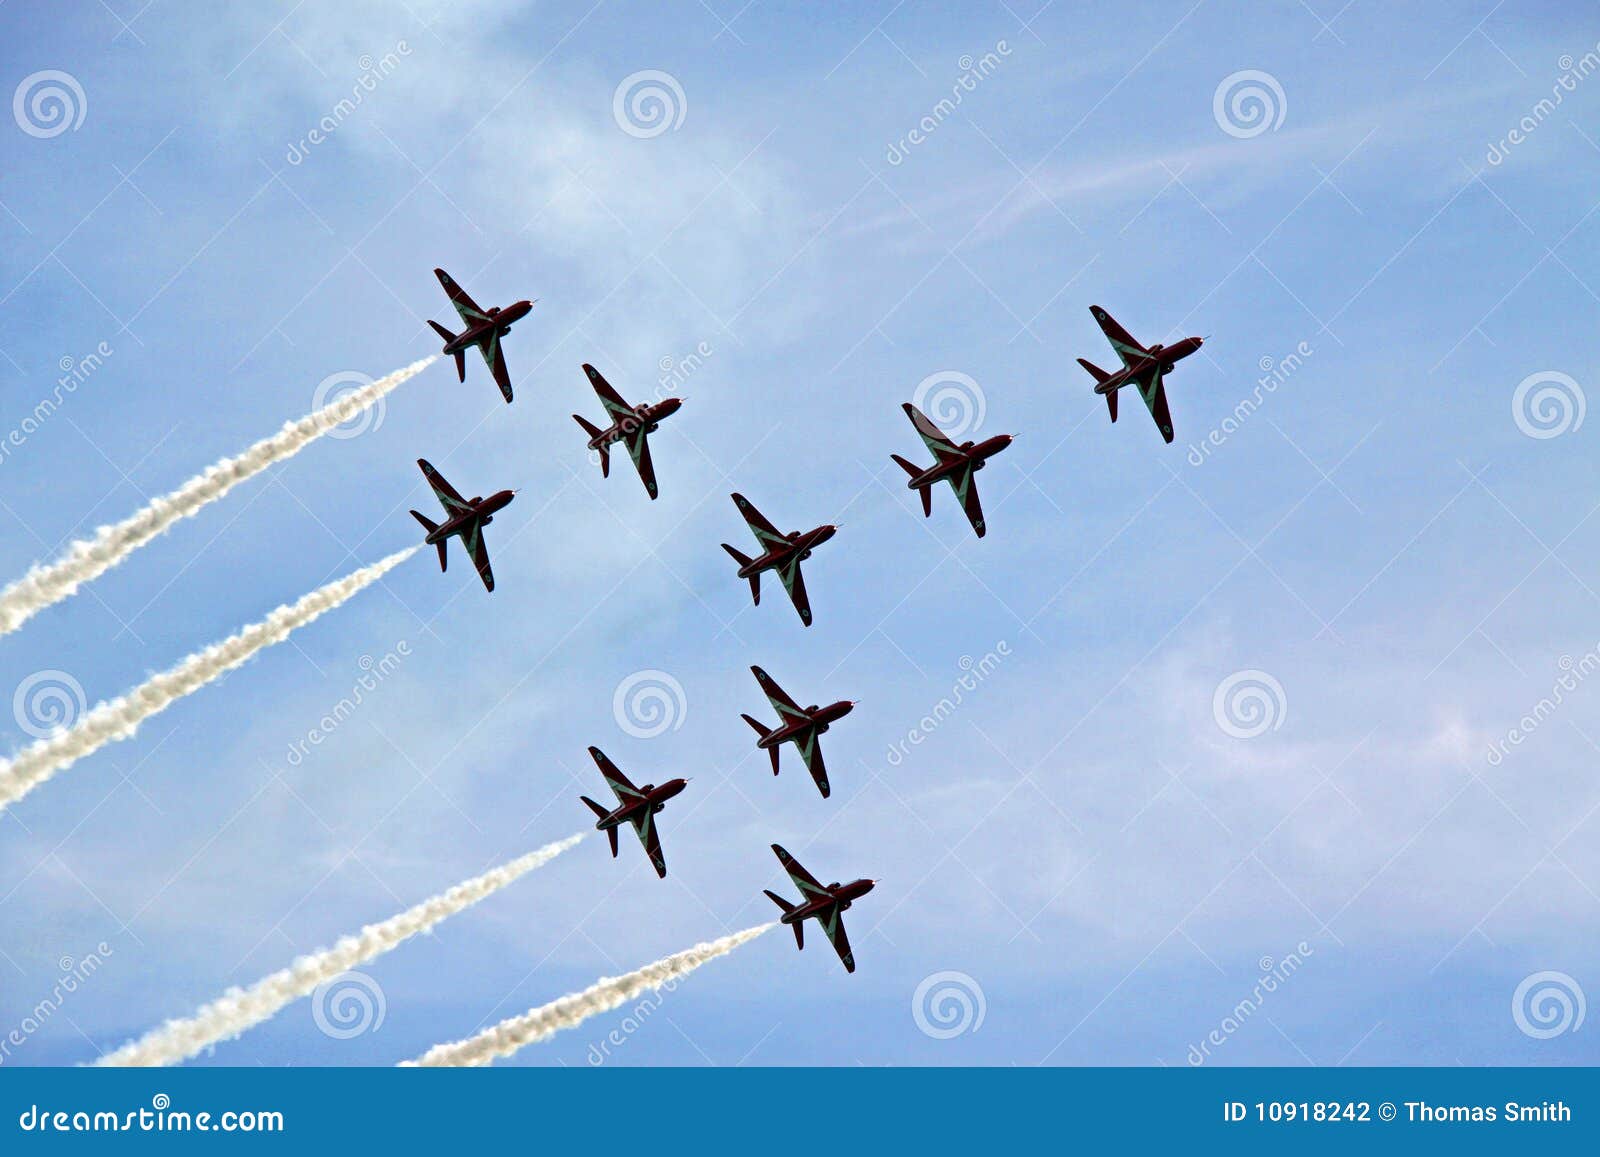 red arrow raf airforce aerobatic jet aircraft